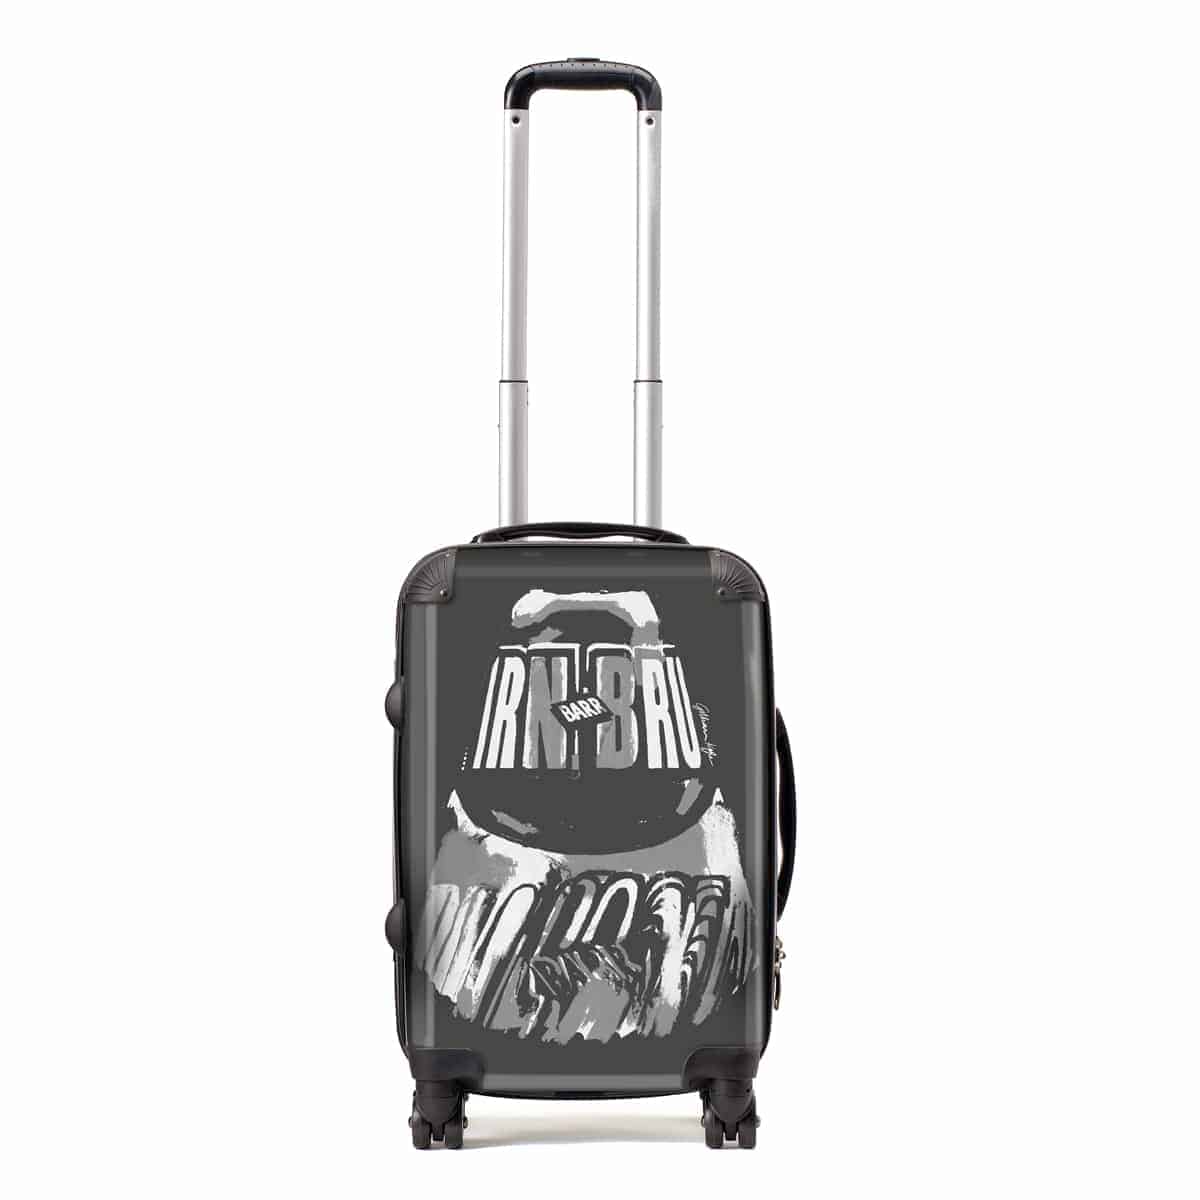 gillian-kyle-scottish-artist-irnbru-official-merchandise-product-range-pop-suitcase-luggage-grey